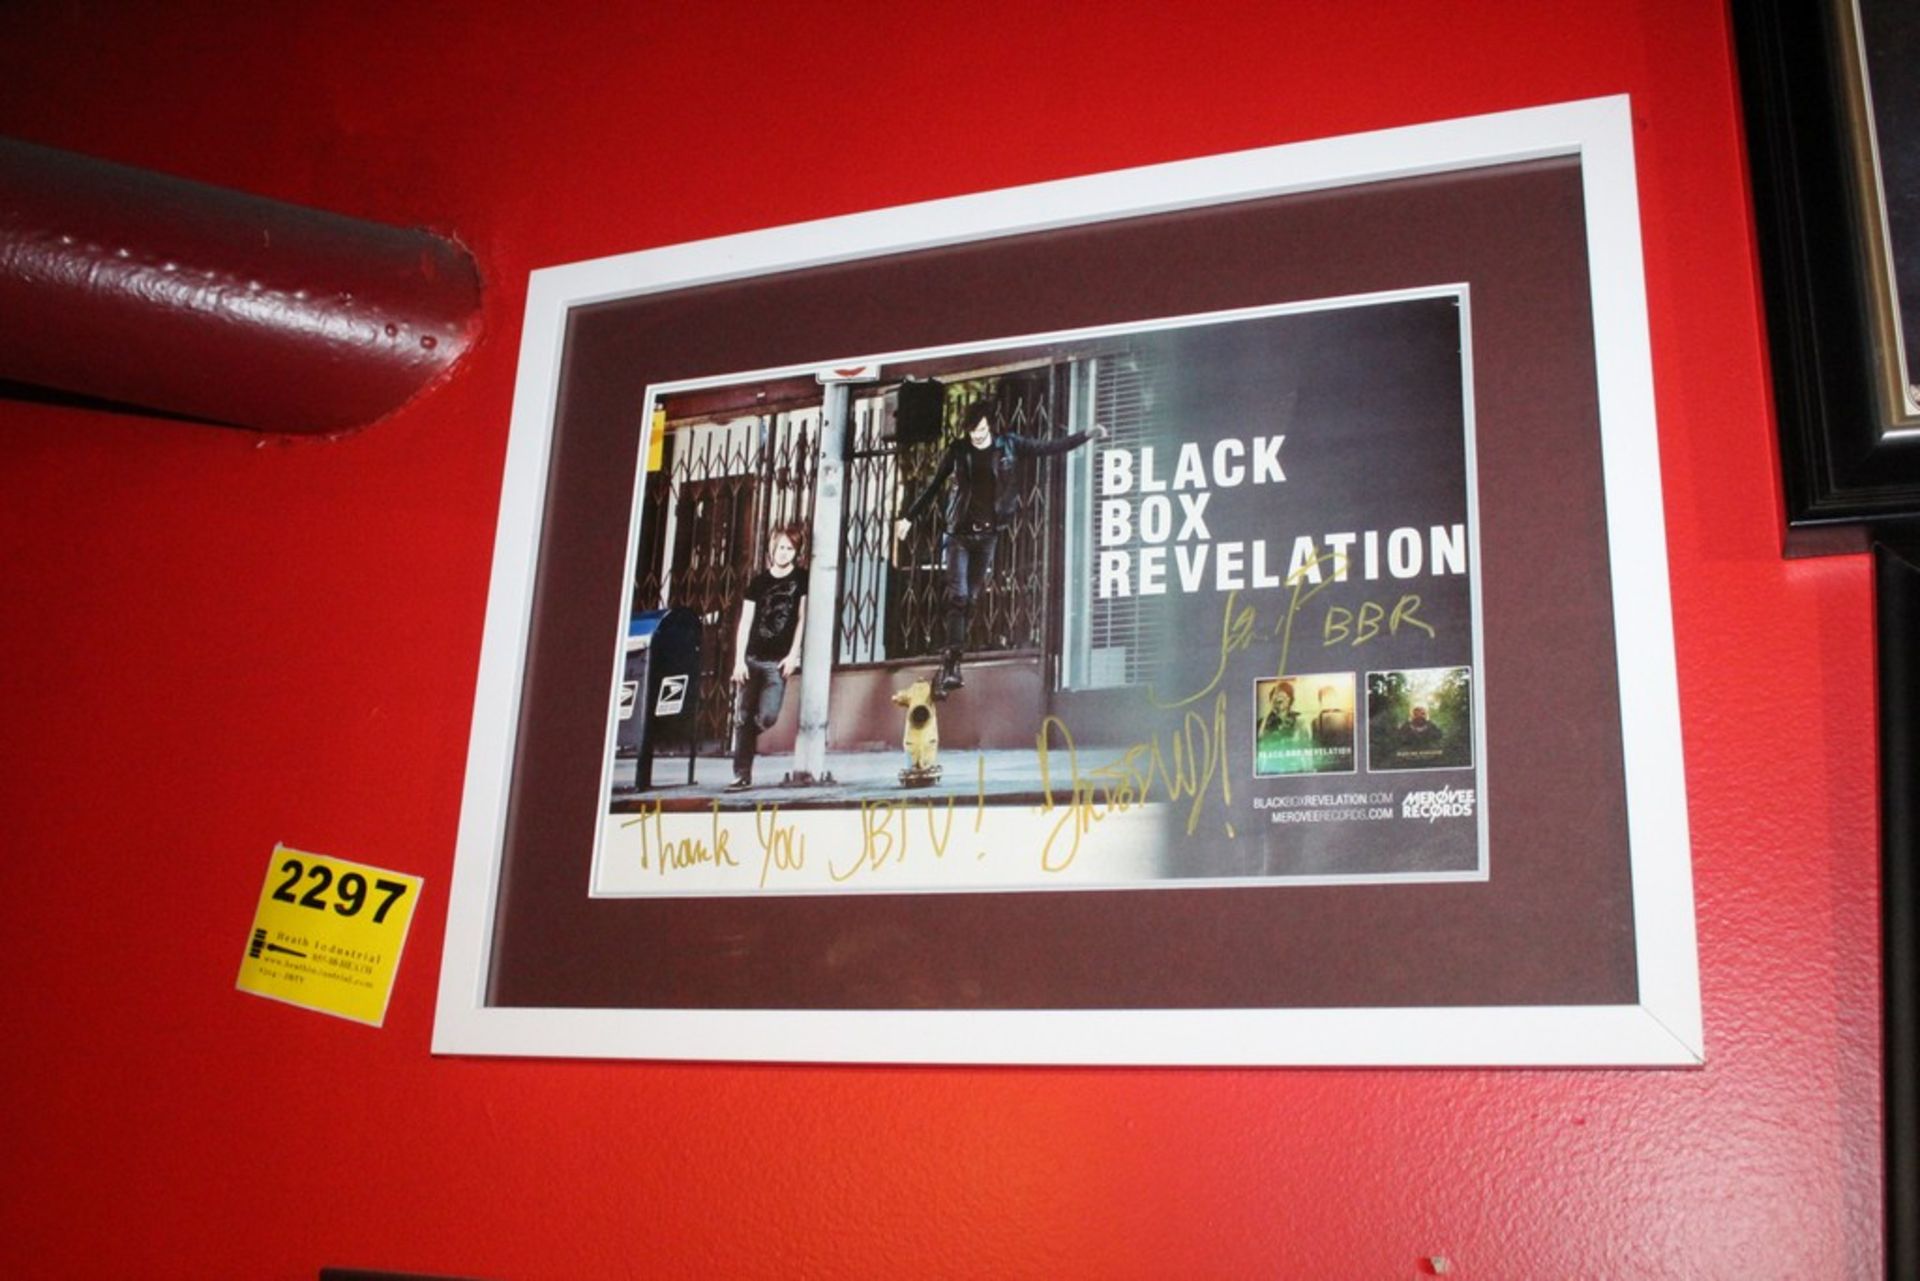 Black Box Revelation-Signed, Framed Poster - Image 2 of 2